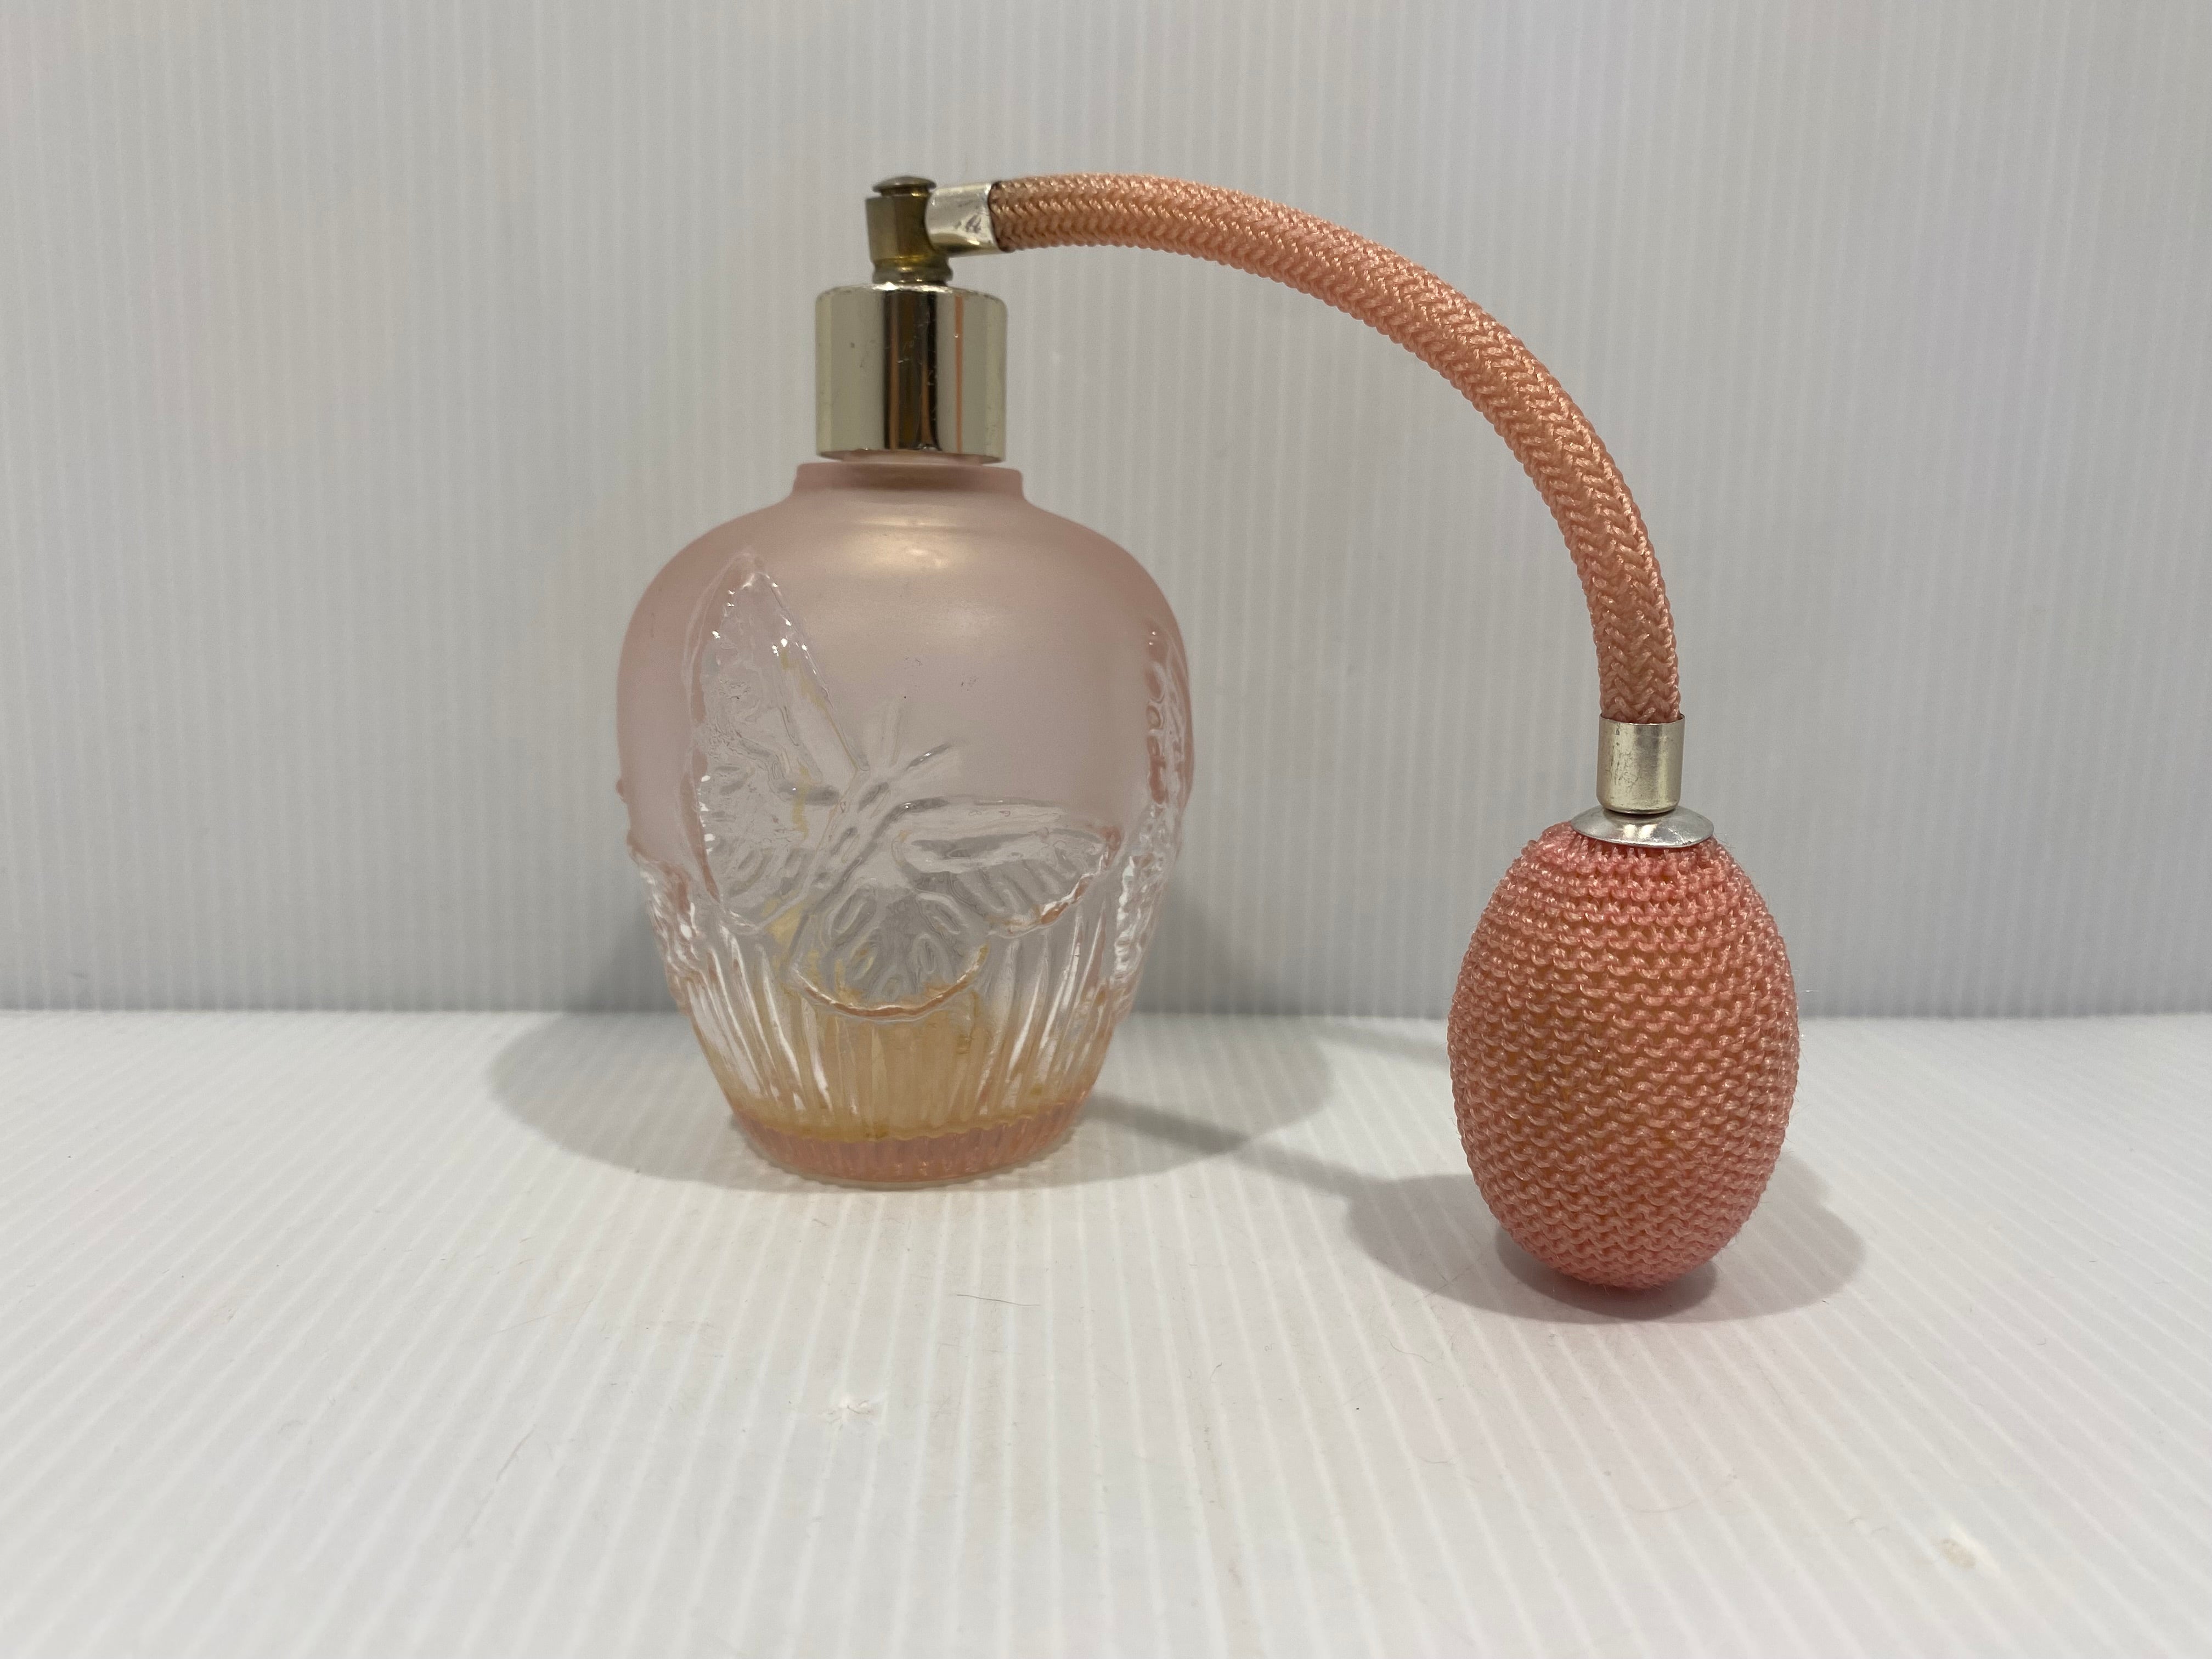 Vintage DeVilbiss Glass Perfume Spray Atomizer. 1950s